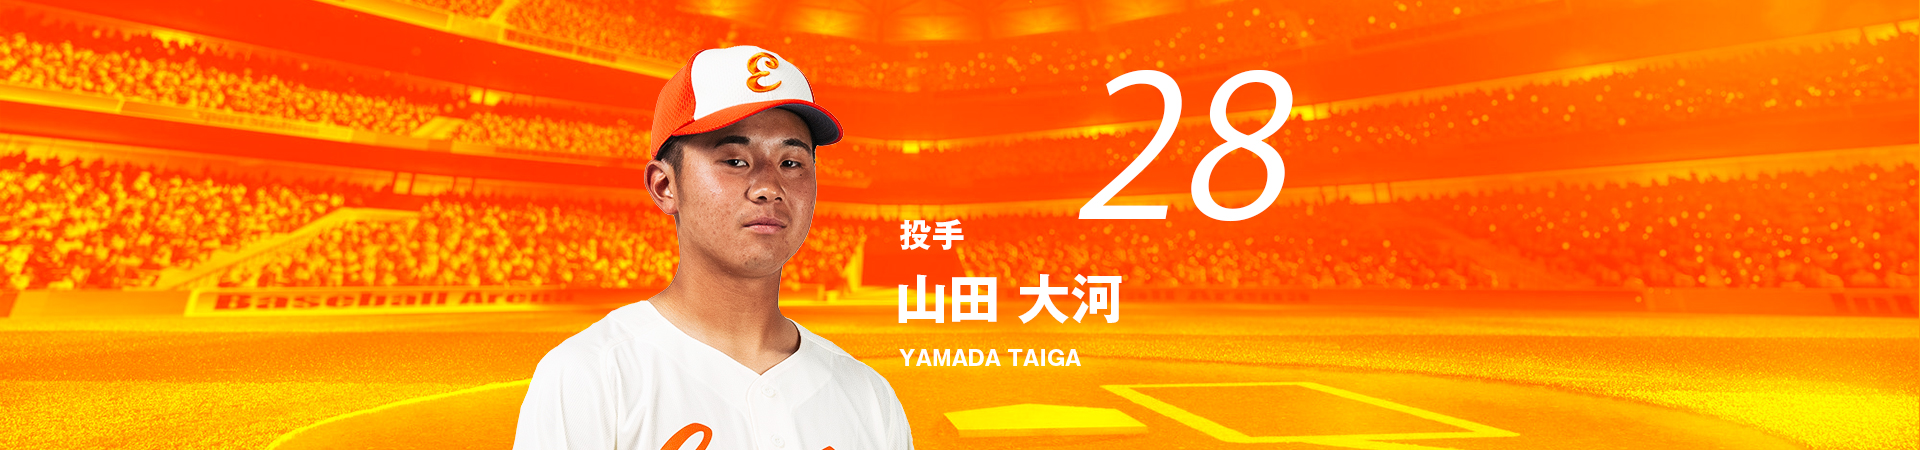 28【投手】山田 大河-YAMADA TAIGA